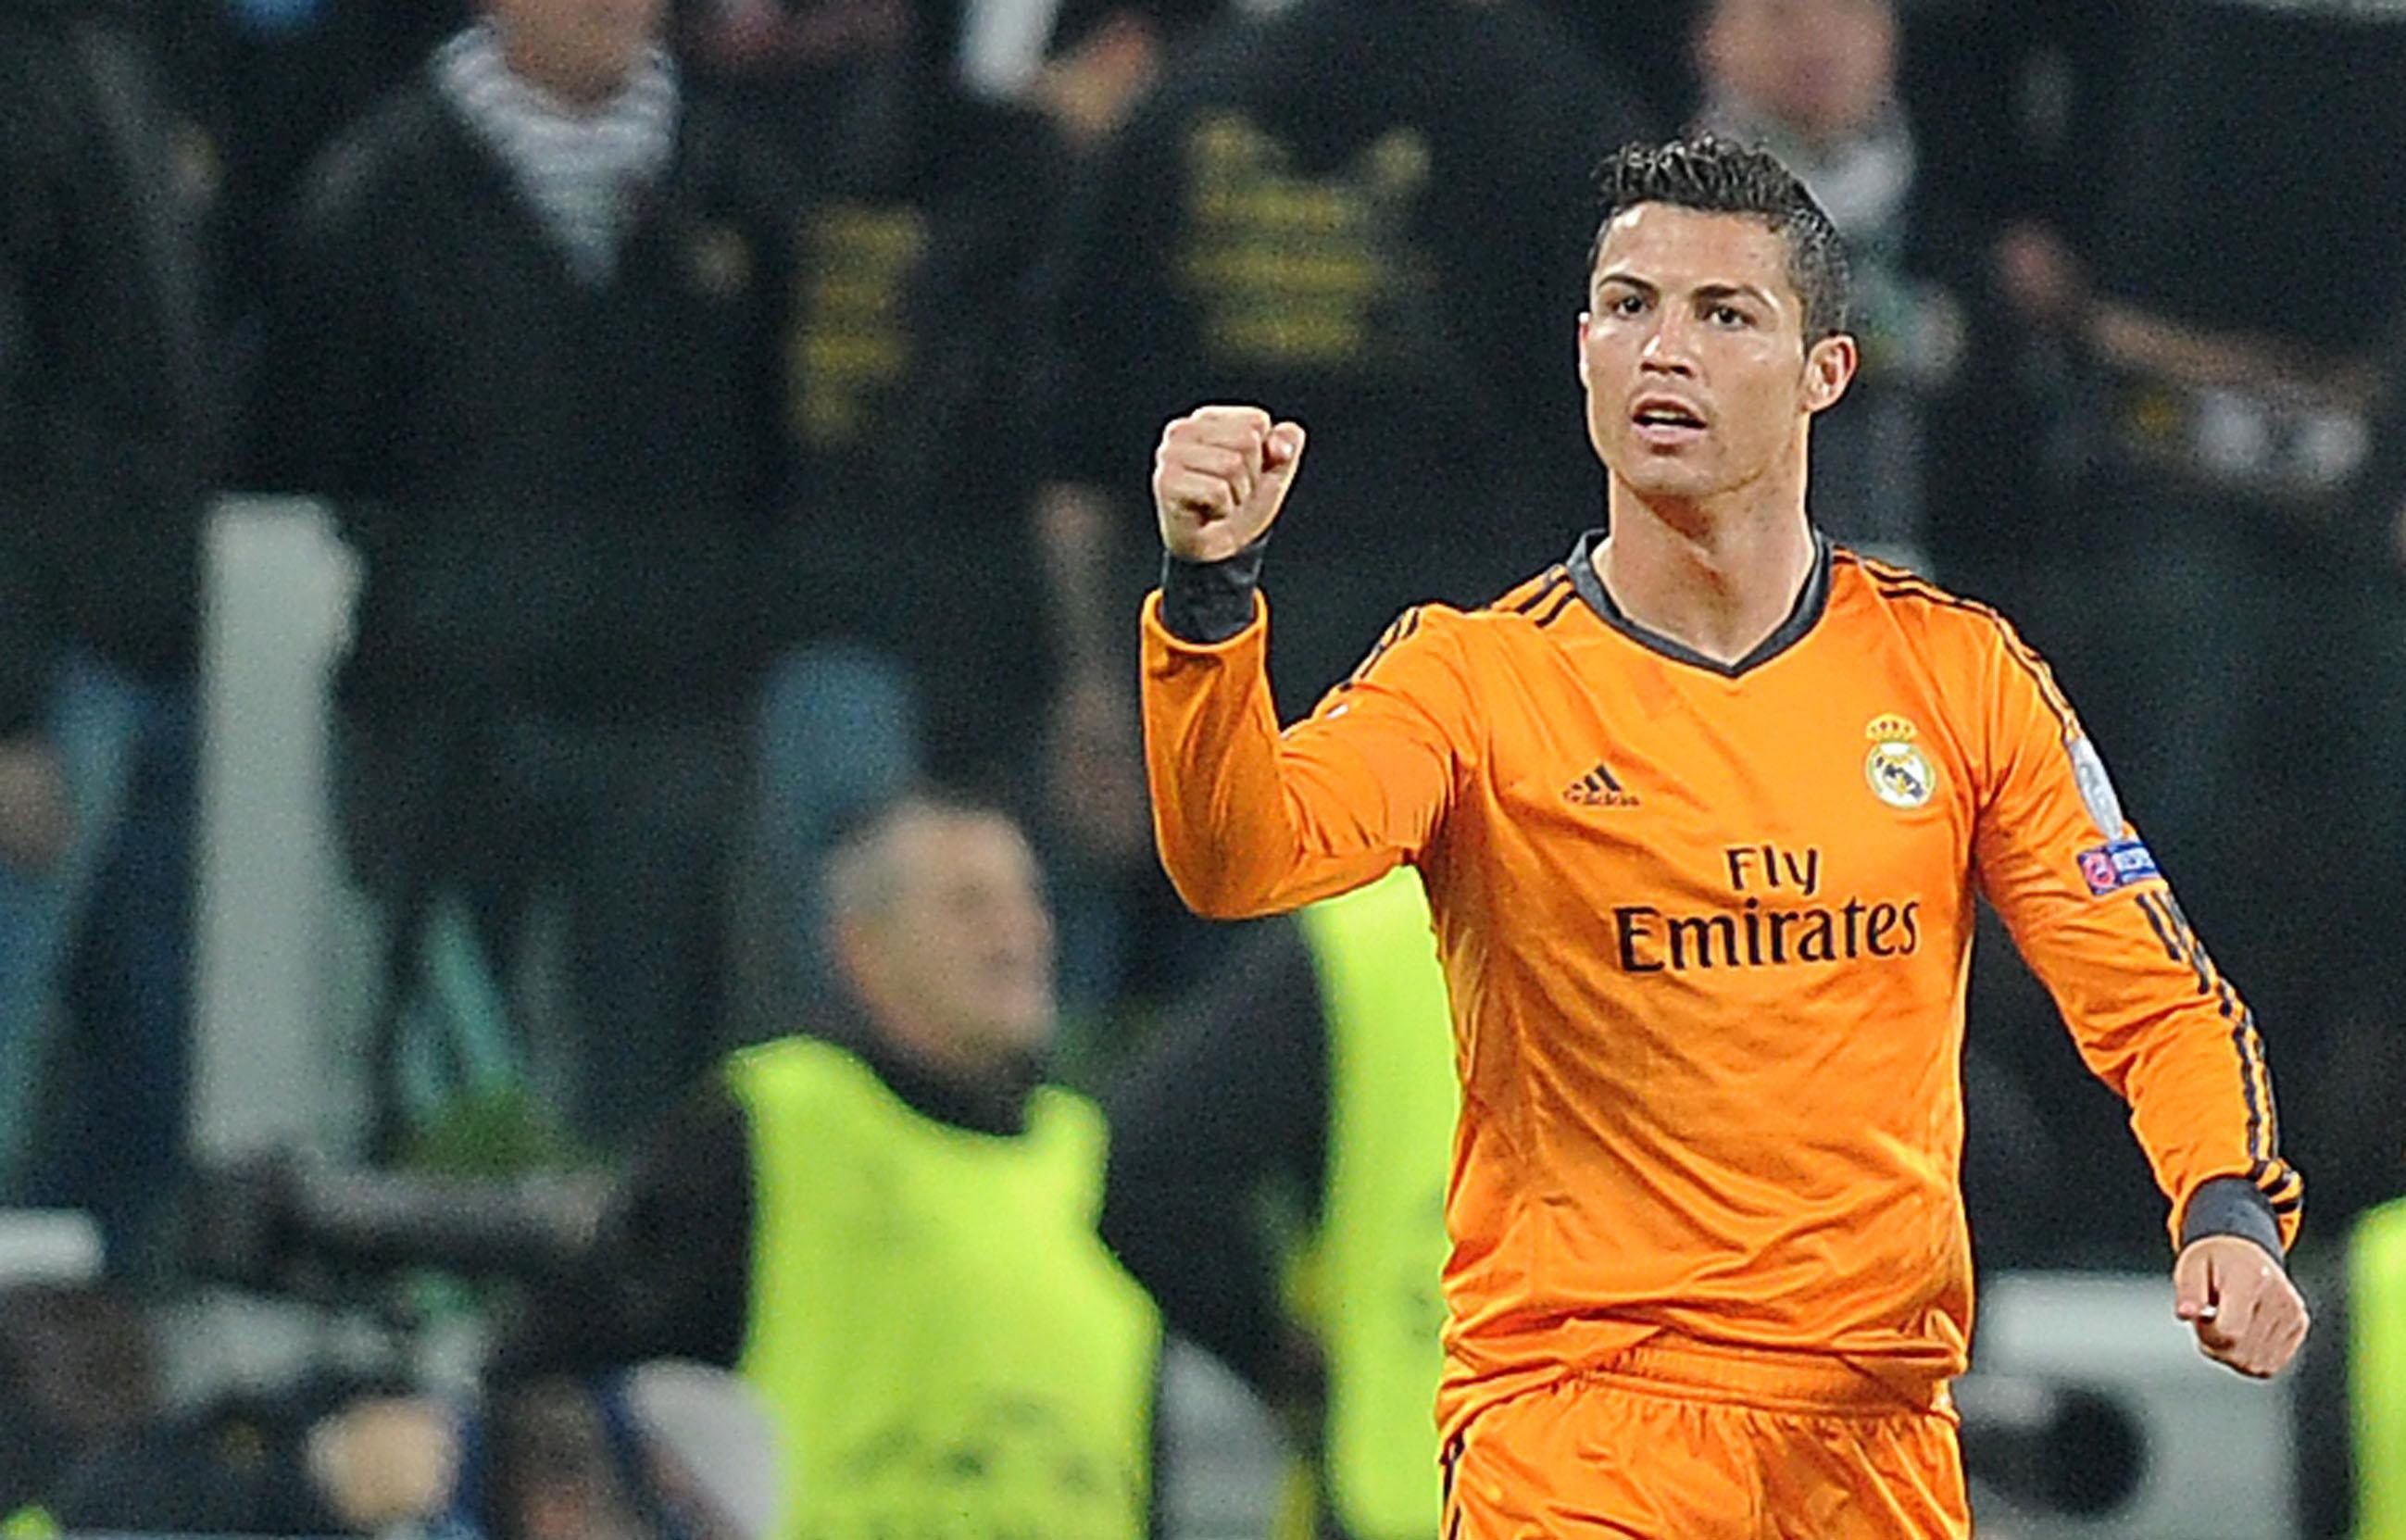 Cristiano Ronaldo playing at the Juventus stadium in Turin. Photo: EPA